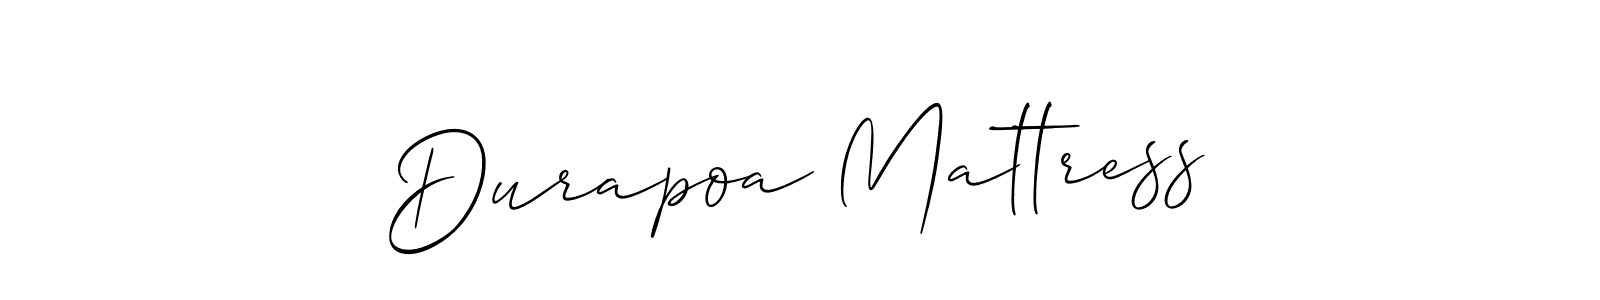 How to make Durapoa Mattress signature? Allison_Script is a professional autograph style. Create handwritten signature for Durapoa Mattress name. Durapoa Mattress signature style 2 images and pictures png